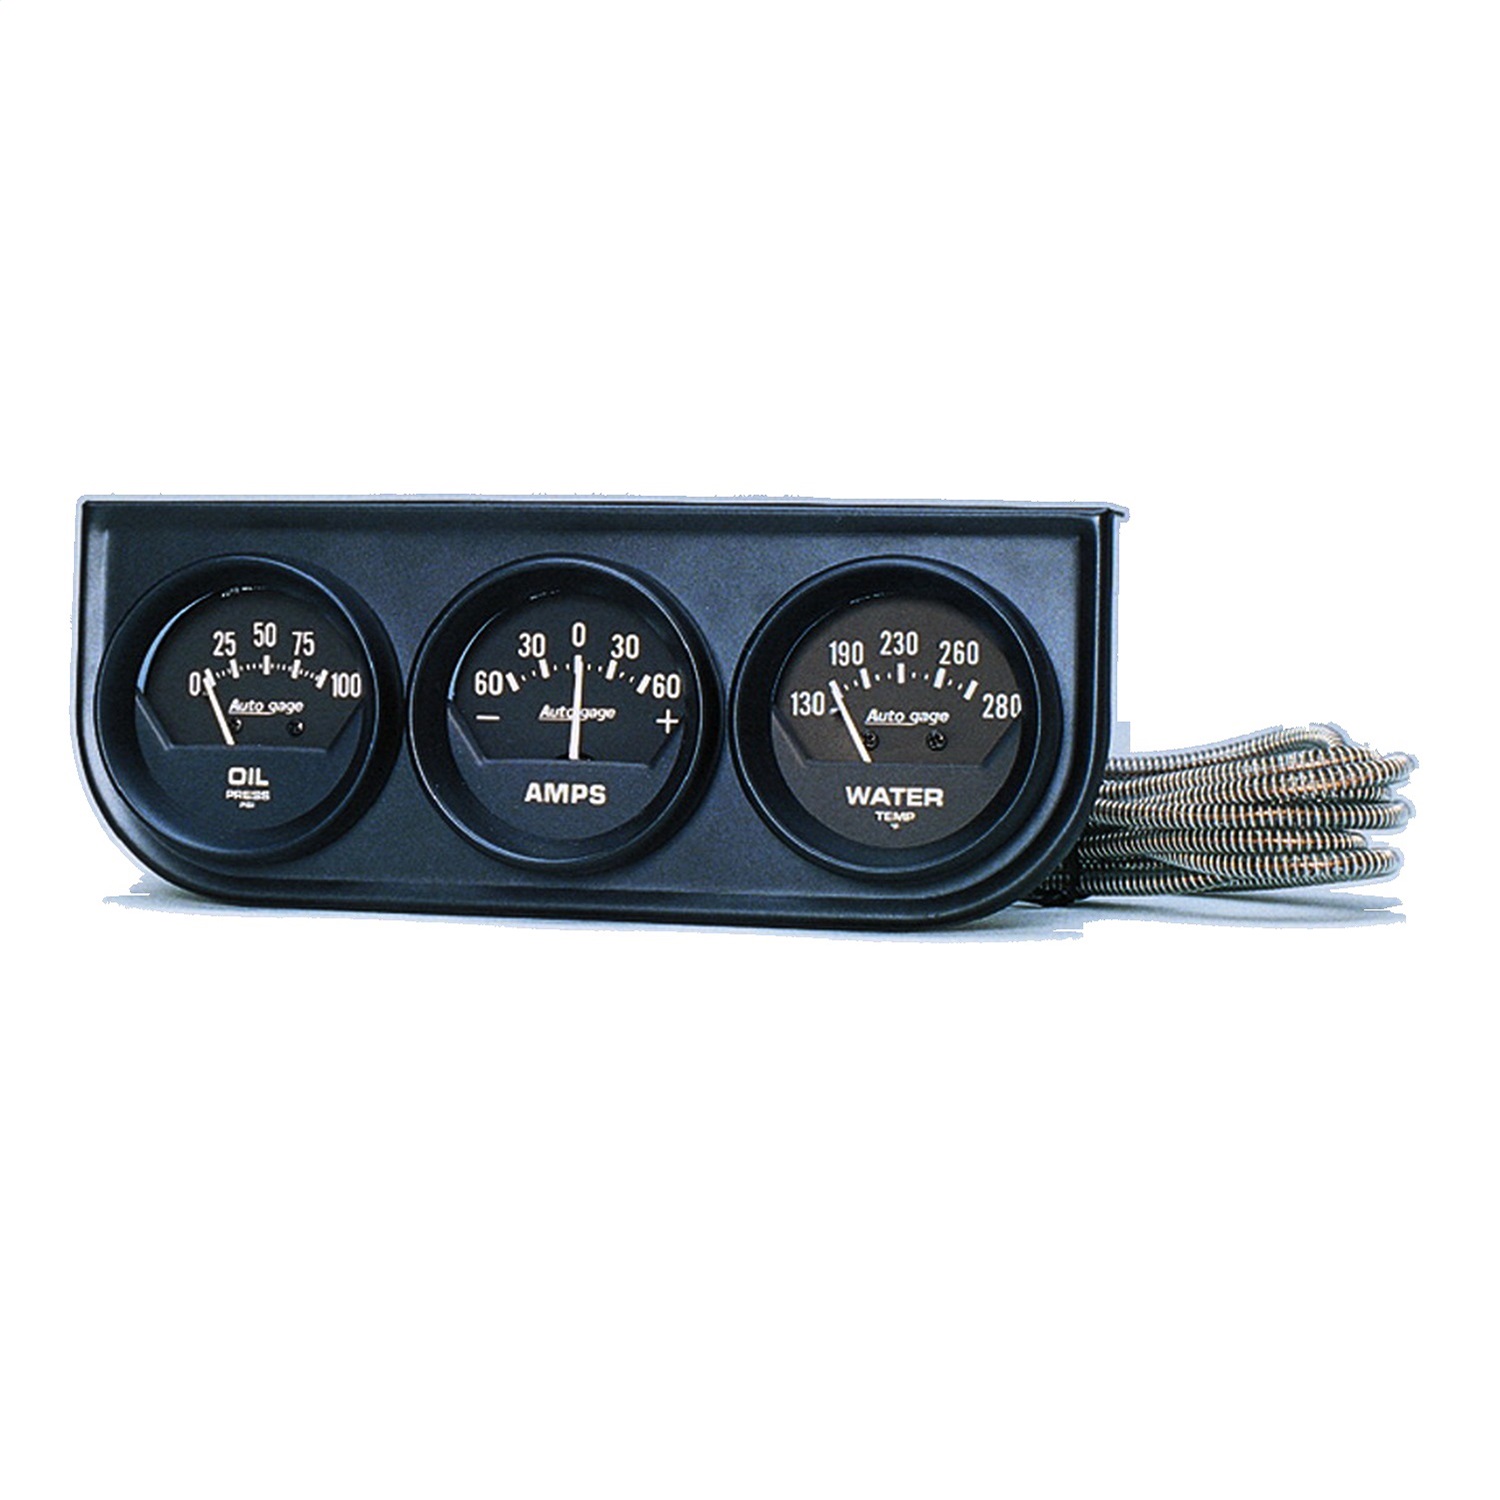 Auto Meter Auto Meter 2347 Autogage; Black Oil/Amp/Water; Black Console